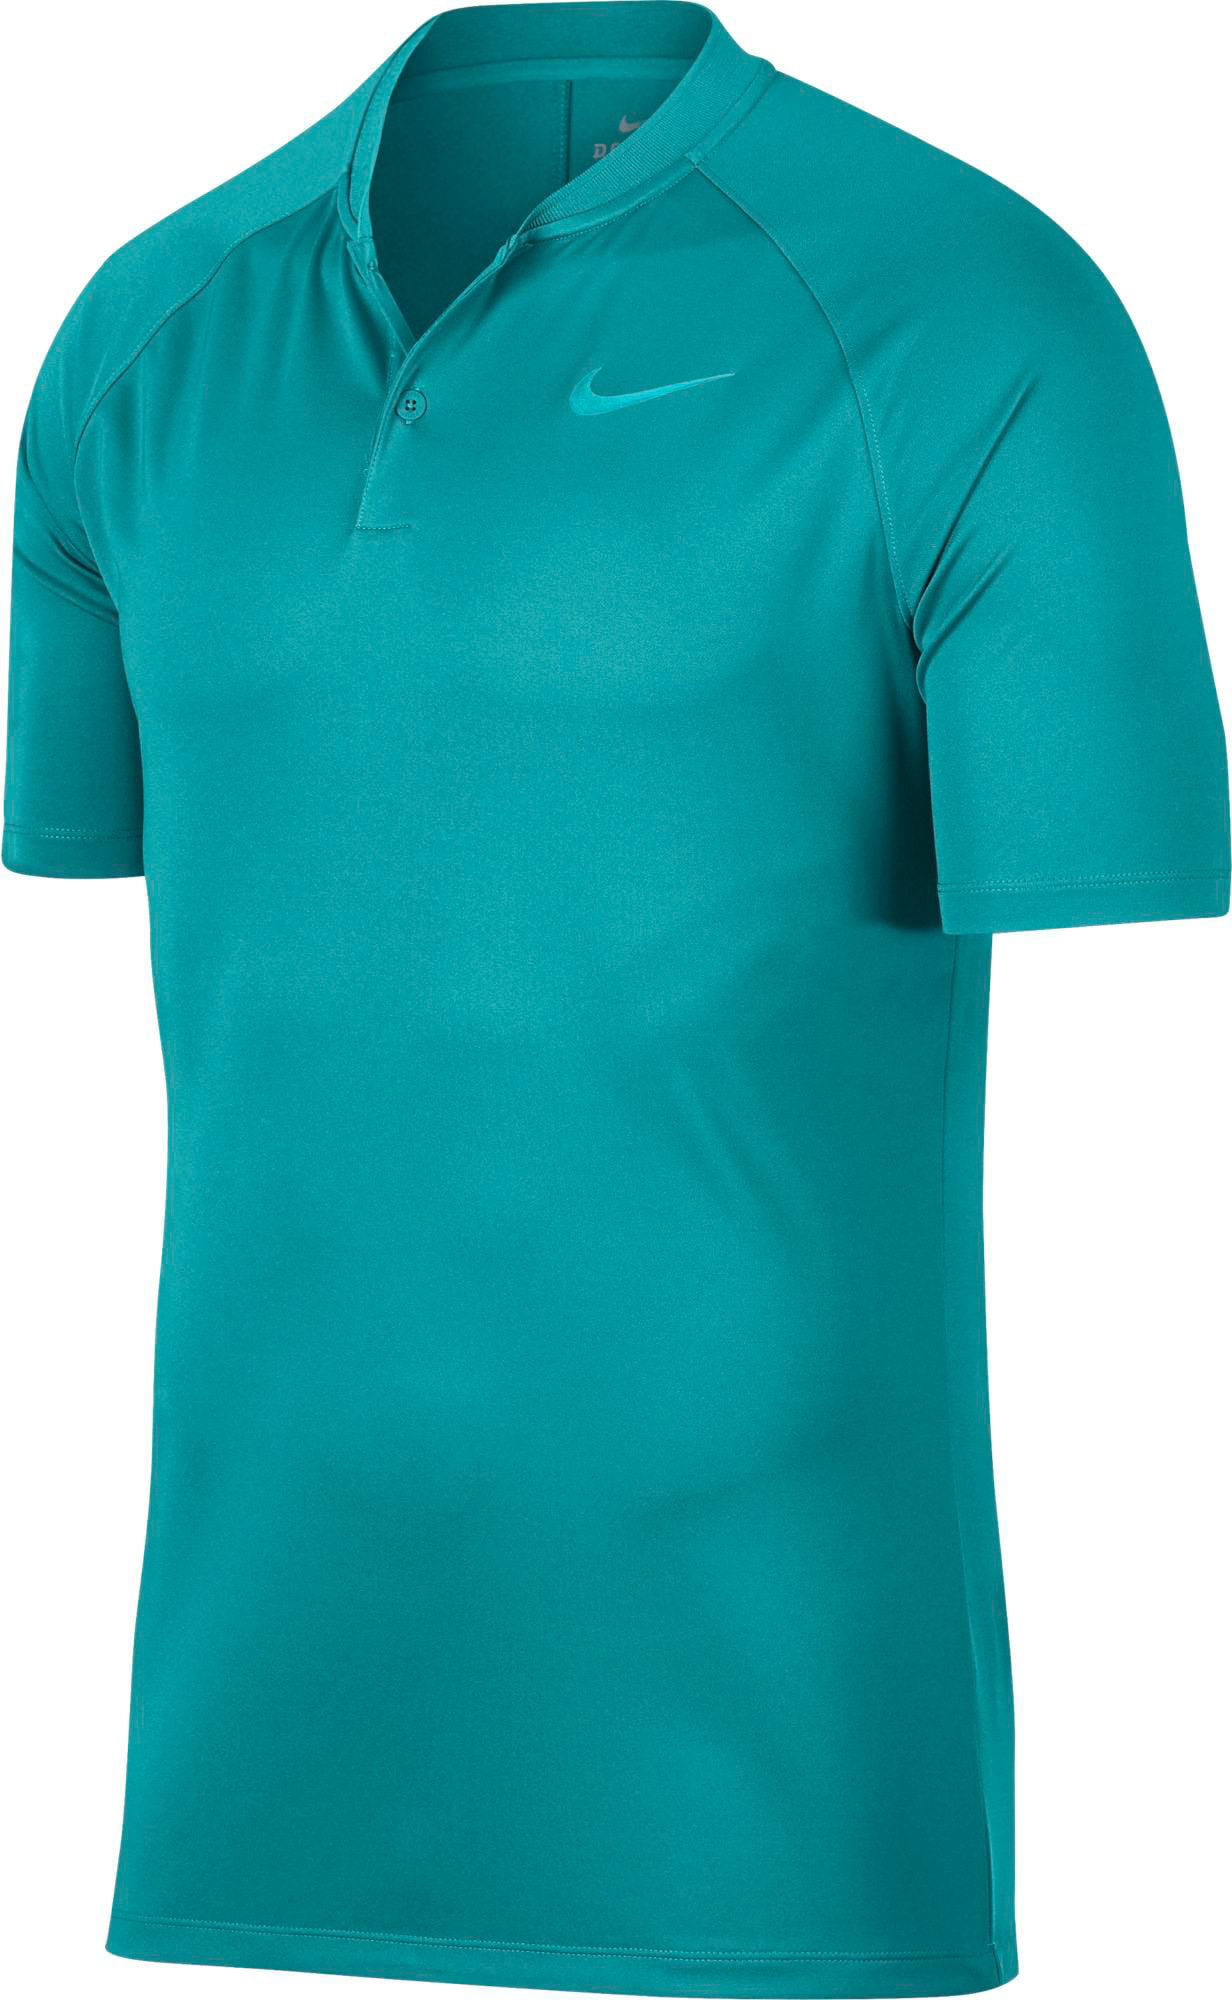 Nike - Nike Men's Dry Momentum Blade Collar Golf Polo - Walmart.com ...